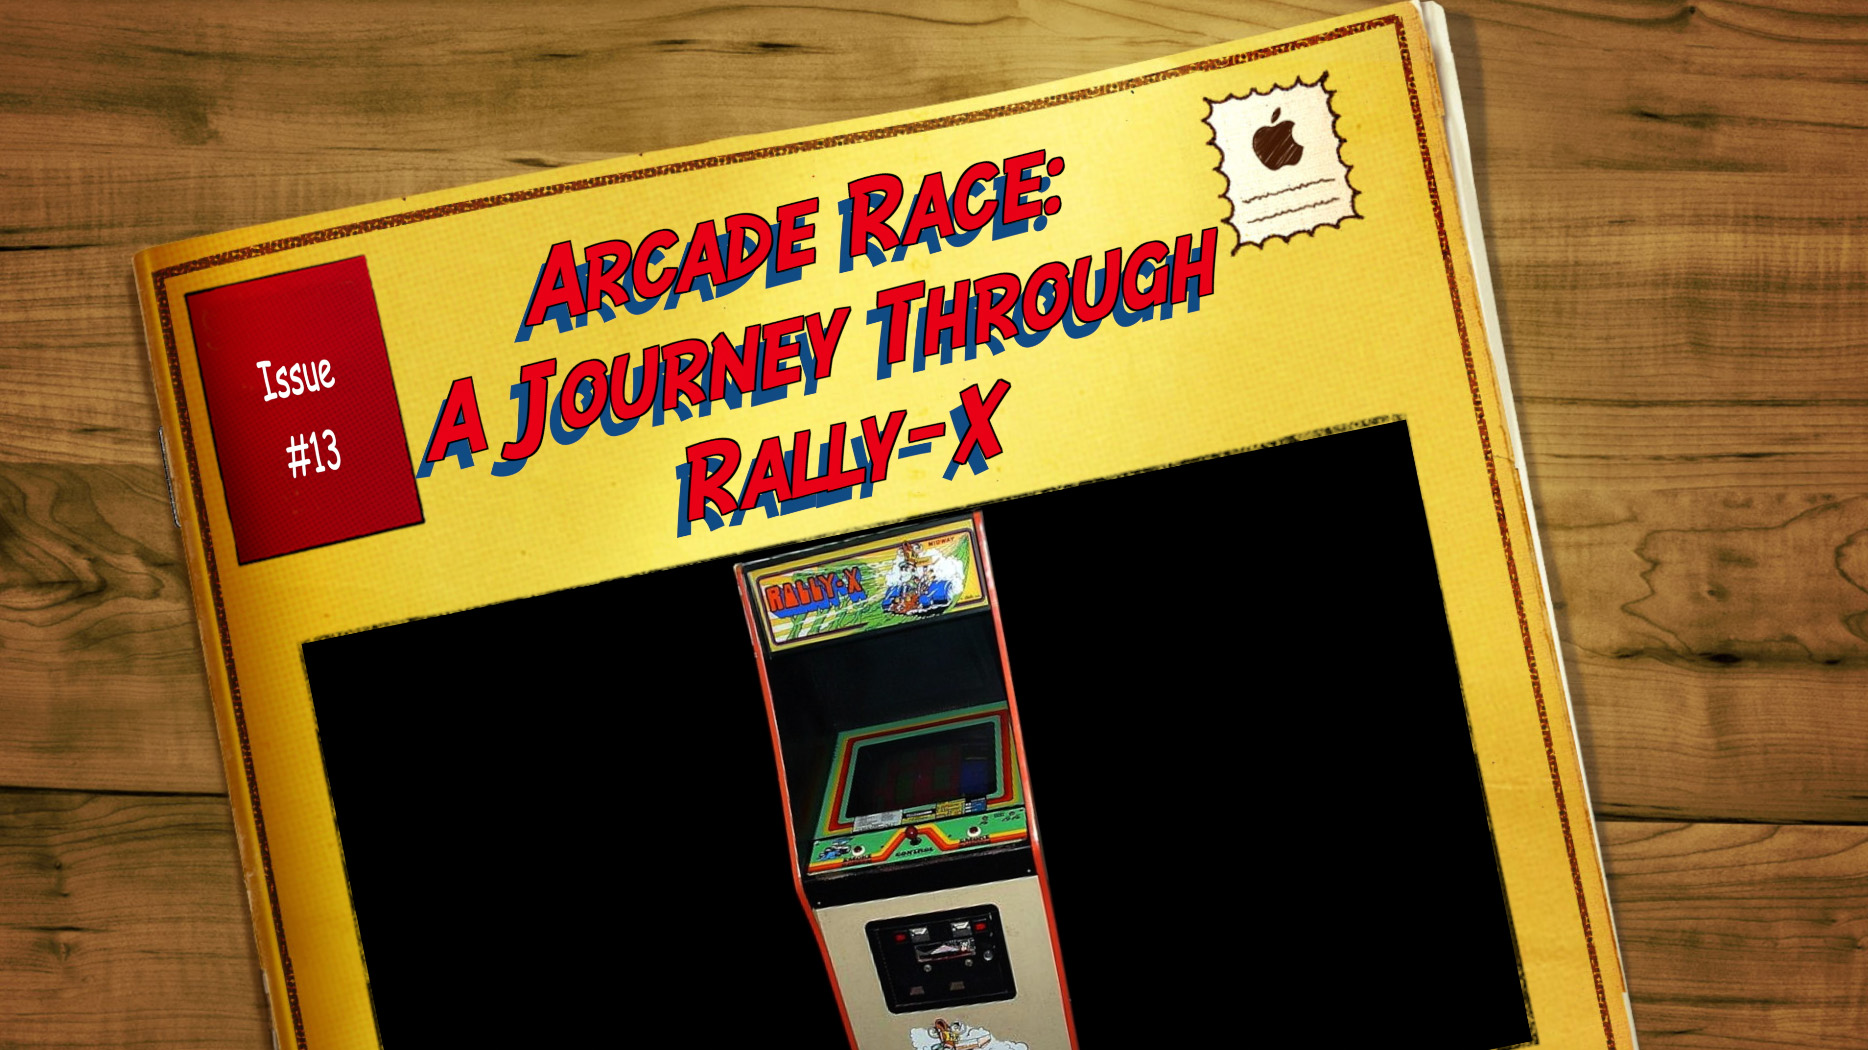 Issue #13 Arcade Race: A Journey Through Rally-X